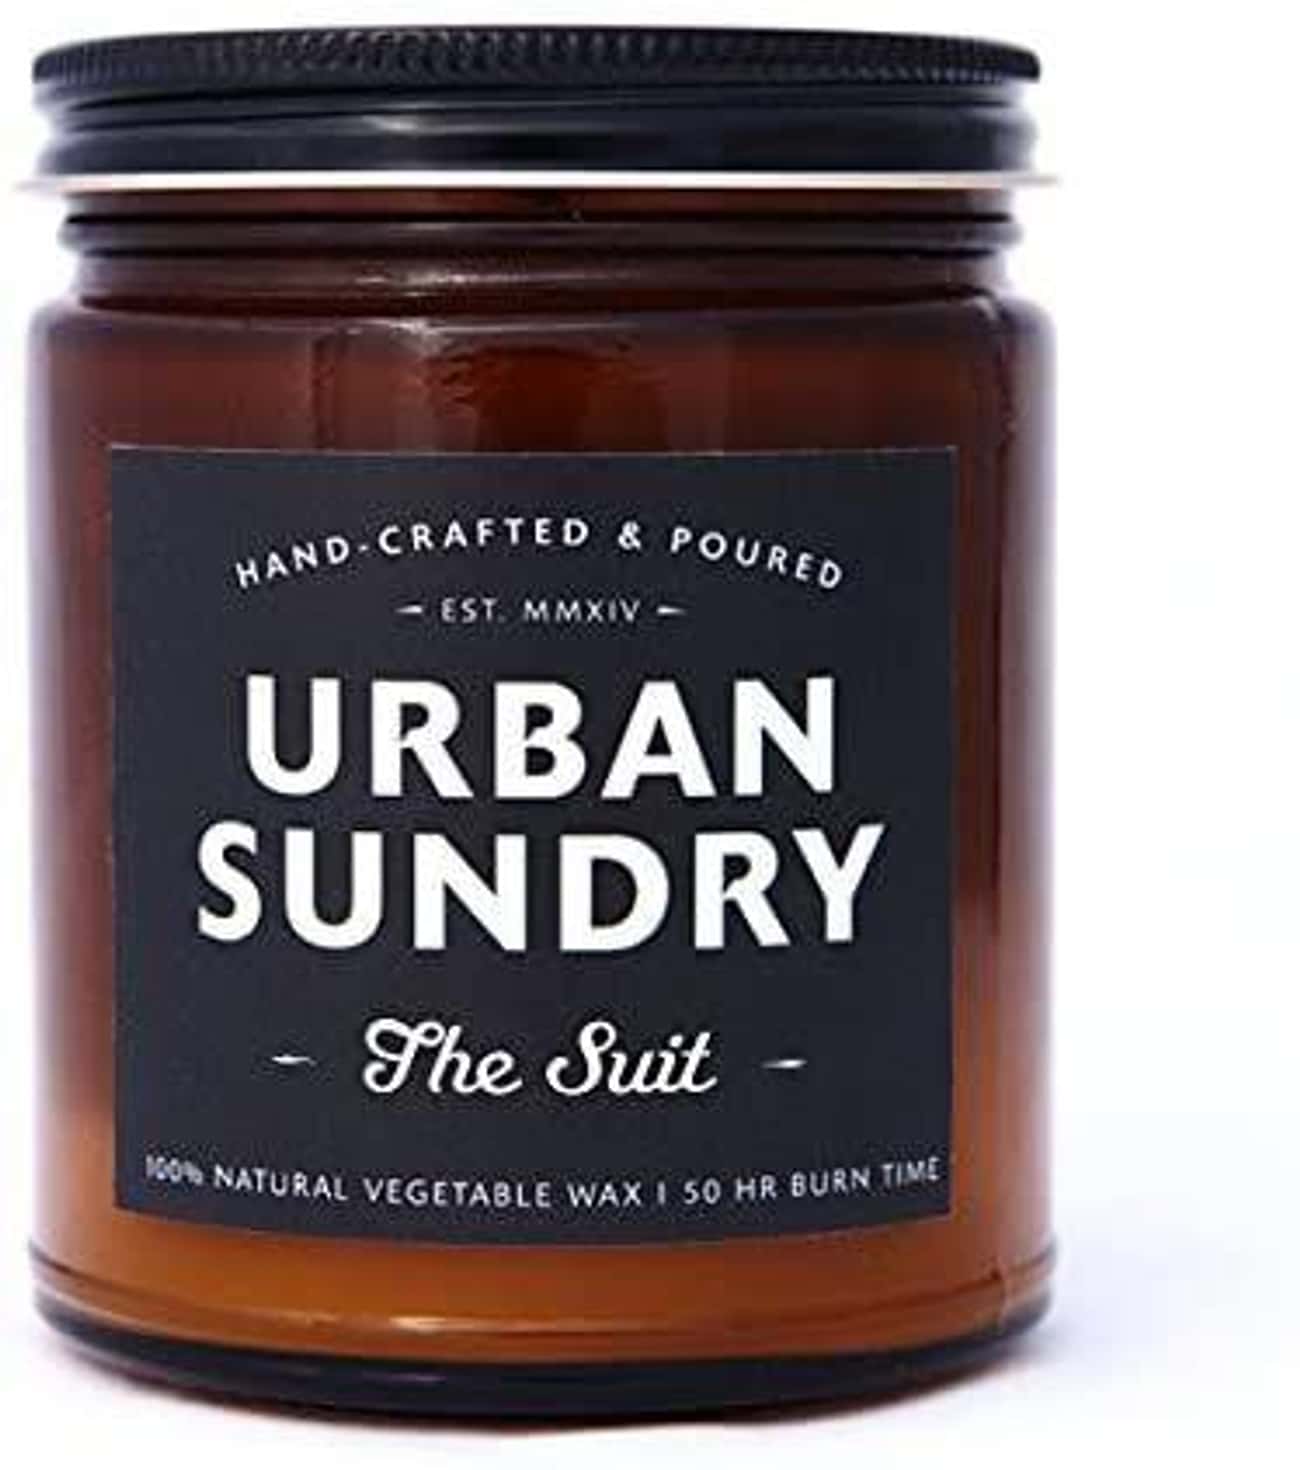 Urban Sundry The Suit Fragrance: Vetiver, Coriander, Sandalwood, Tobacco, & Cedar